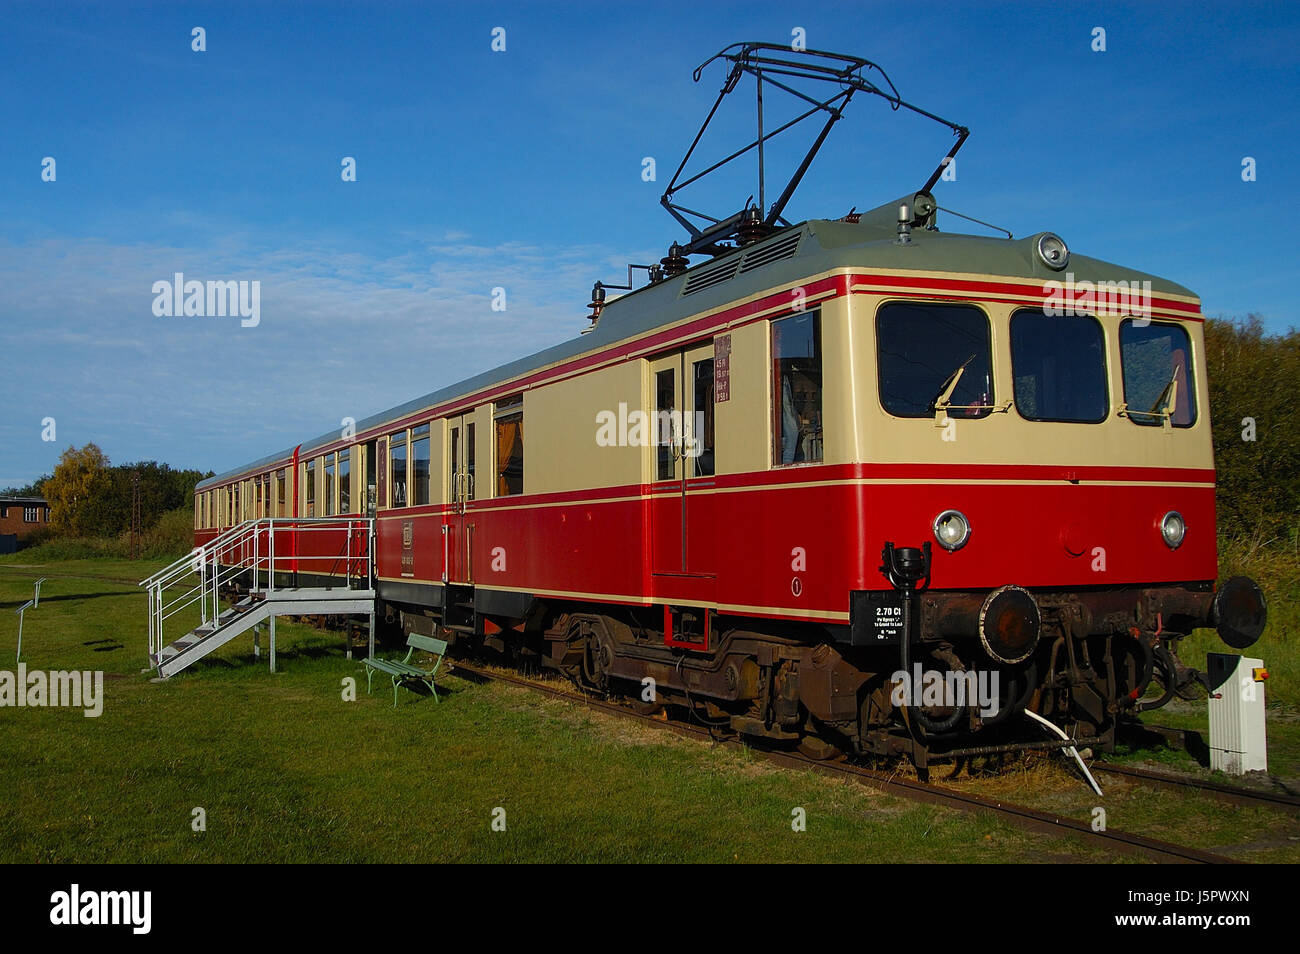 railway locomotive train engine rolling stock vehicle means of travel Stock Photo